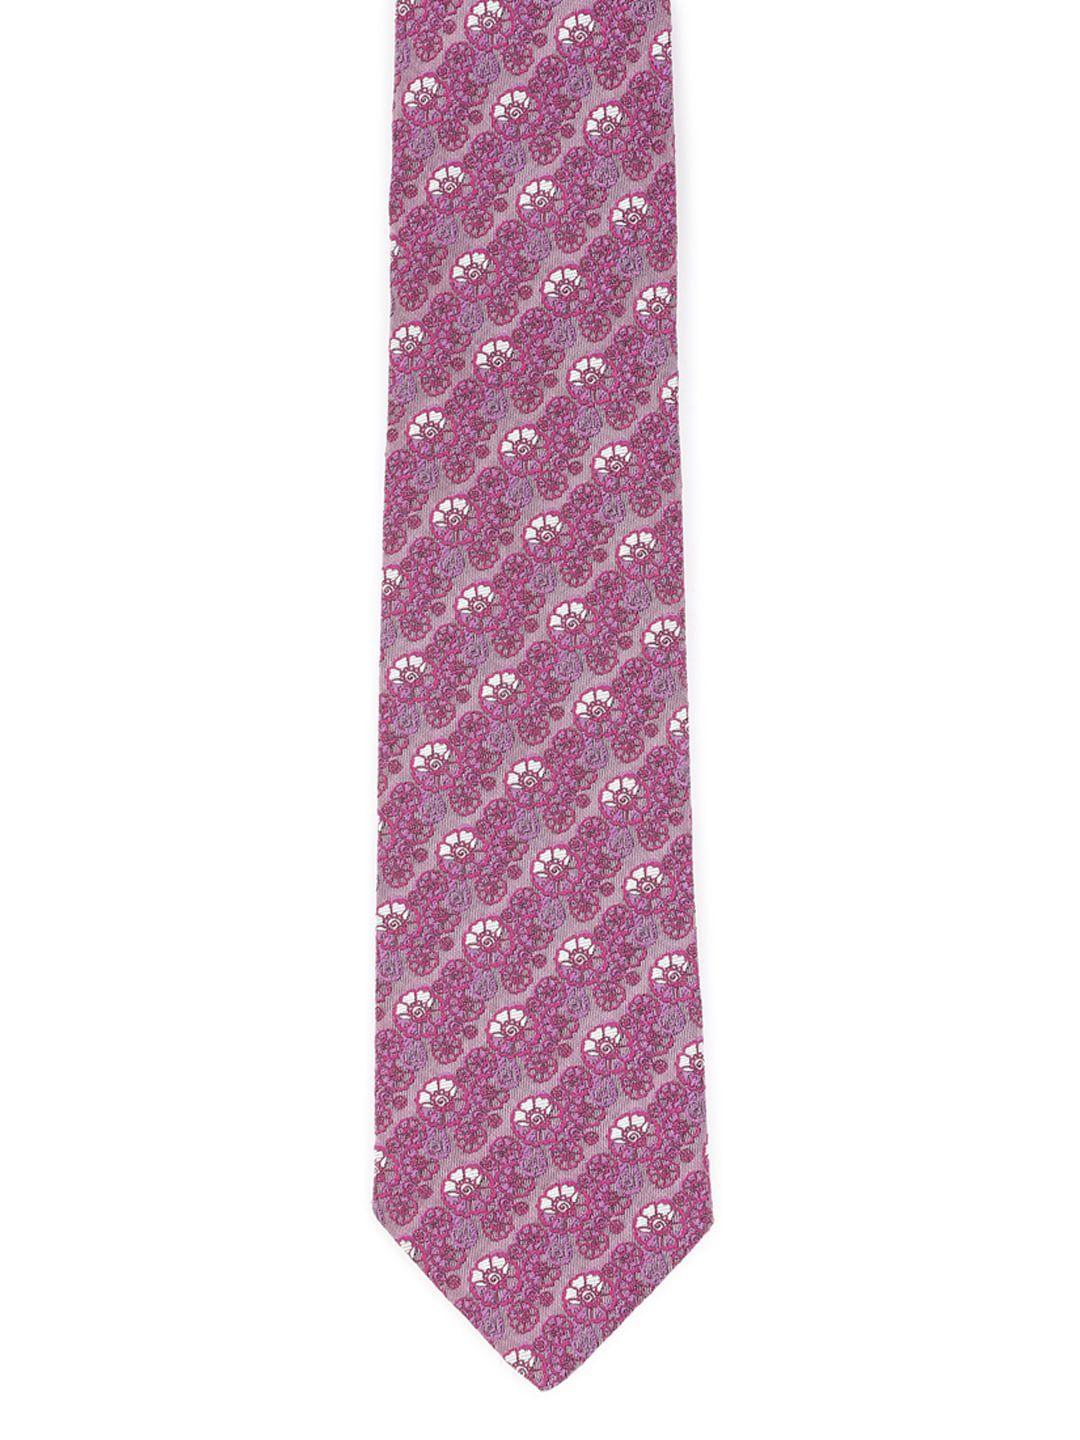 peter england men purple & white woven design broad tie